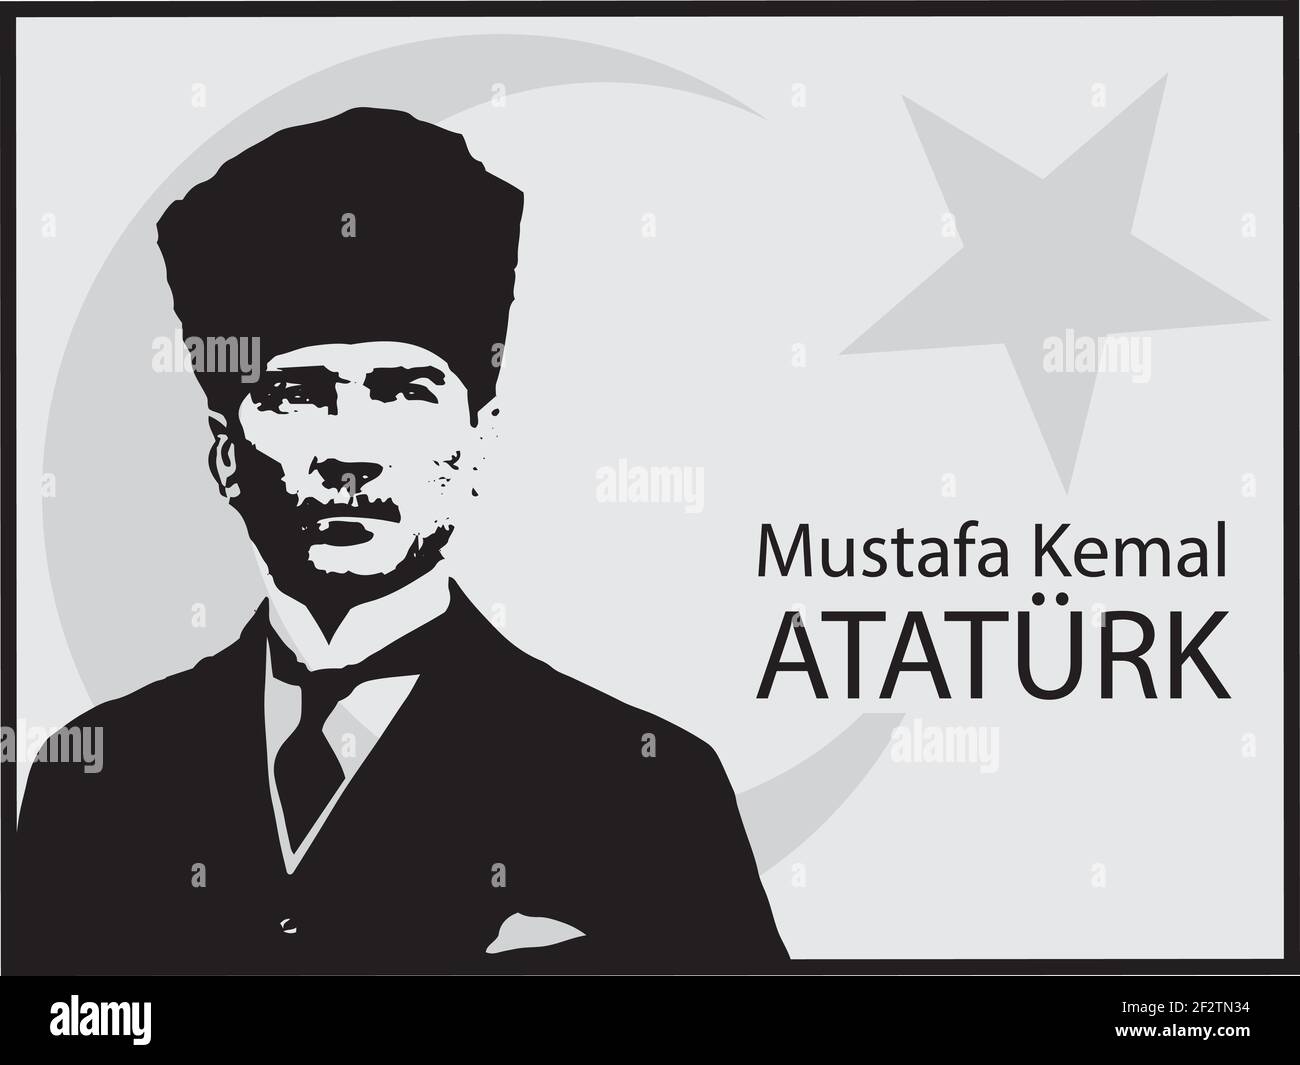 Mustafa Kemal Ataturk, the founder and great leader of Turkish Republic. Stock Vector